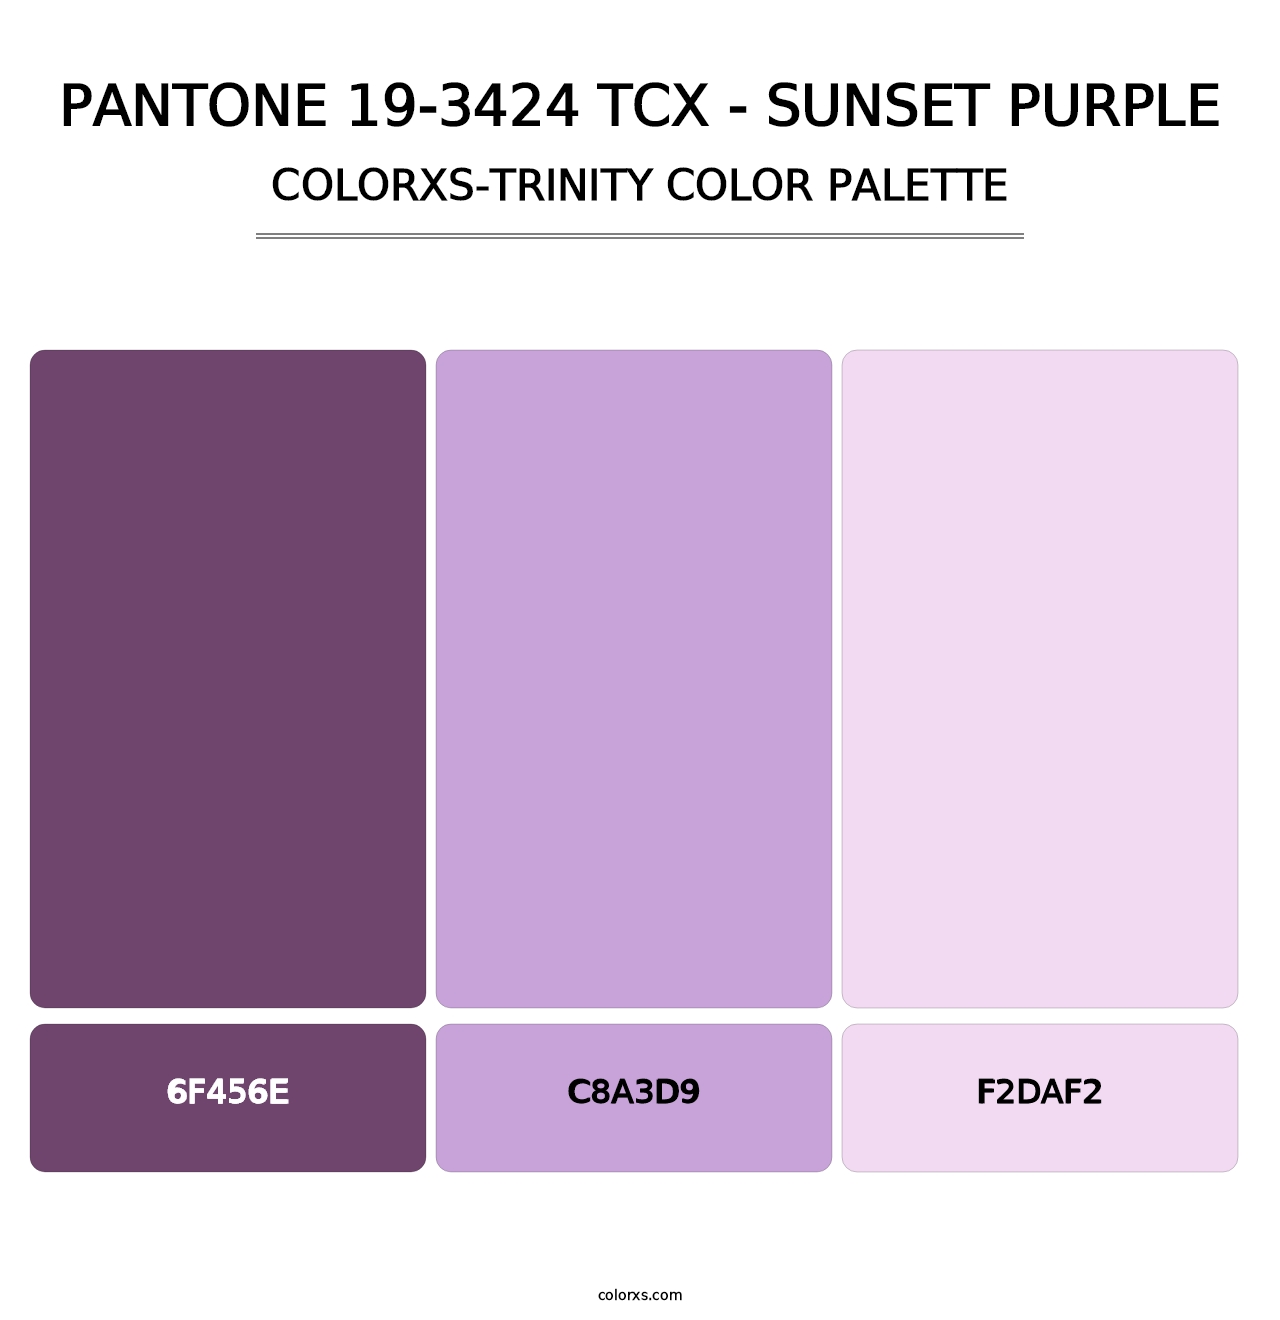 PANTONE 19-3424 TCX - Sunset Purple - Colorxs Trinity Palette